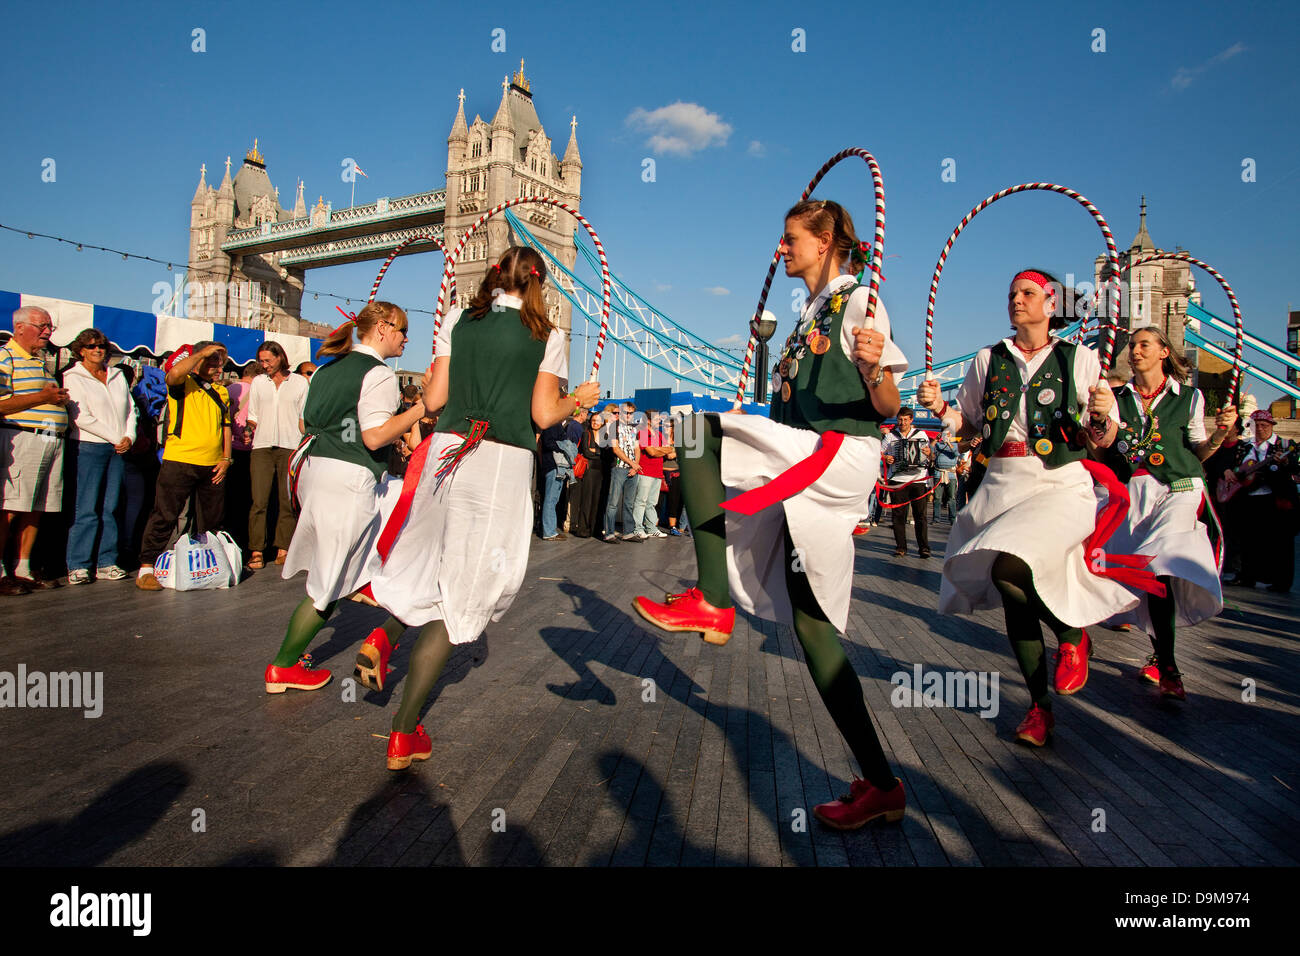 Thames Festival 2009. Les femmes d'encrasser dancers performing in front of Tower Bridge, London, UK Banque D'Images